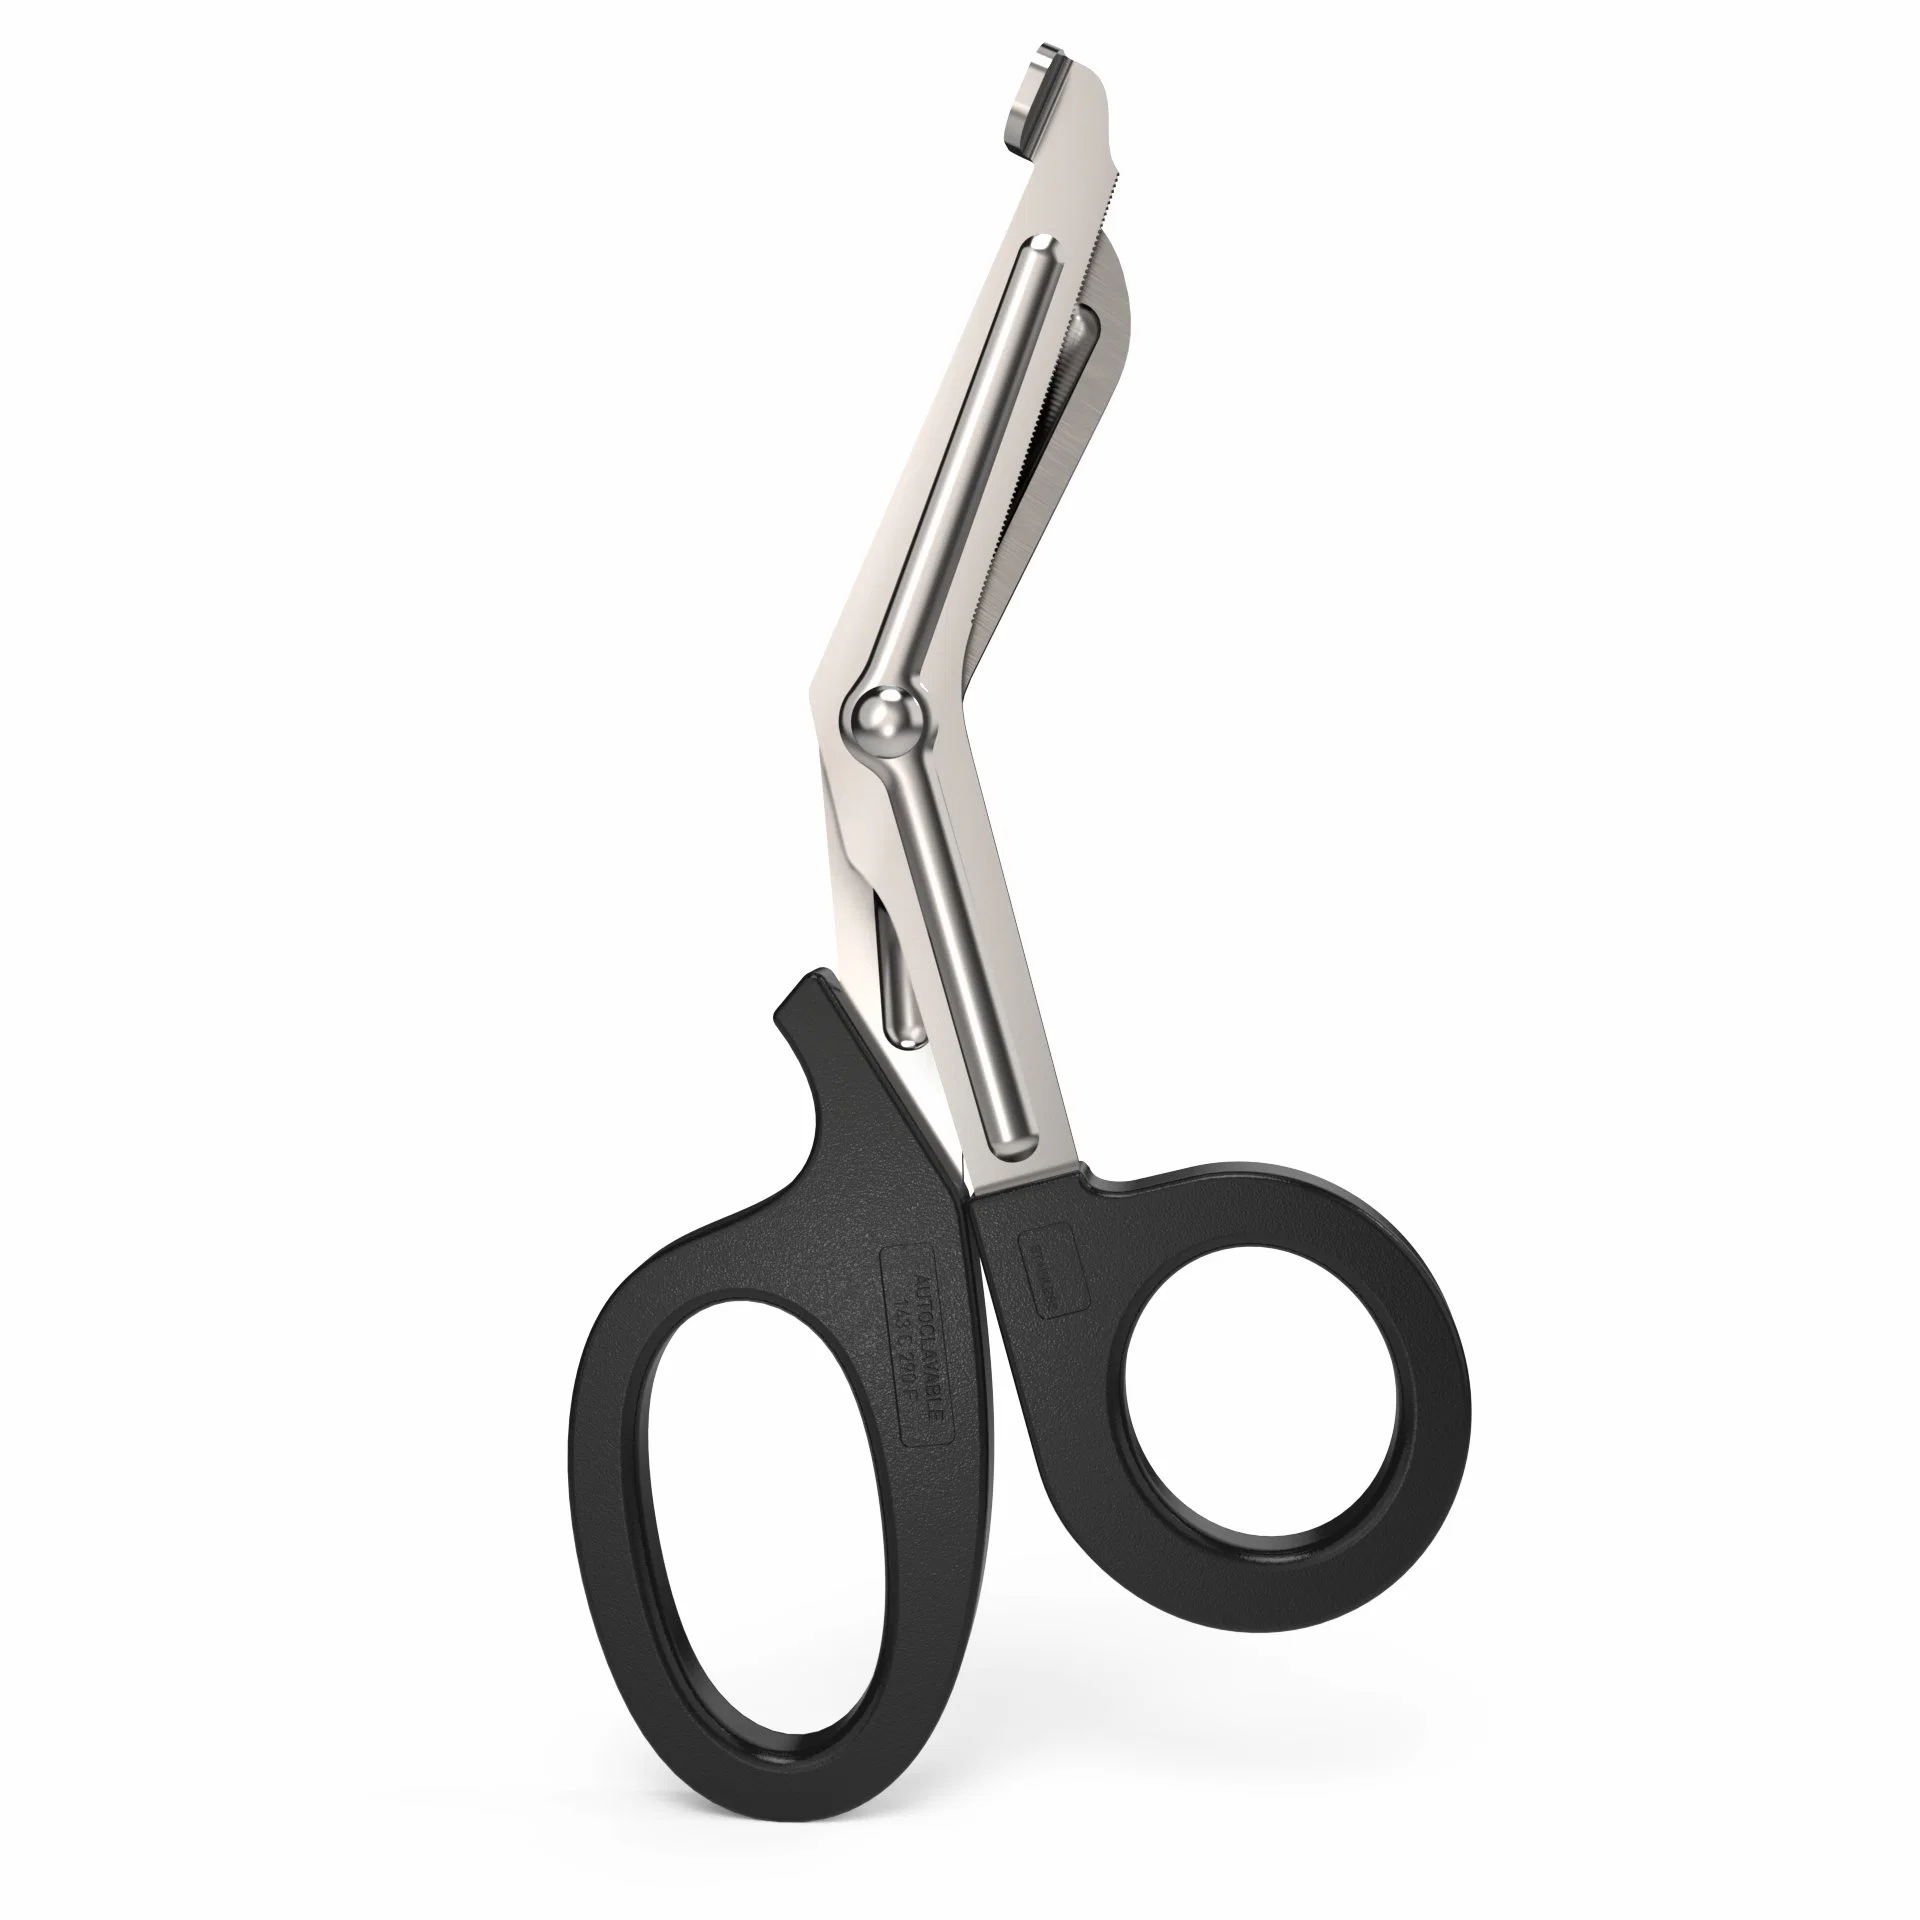 Snips Clothing Cutters Bandage Shears Scissors